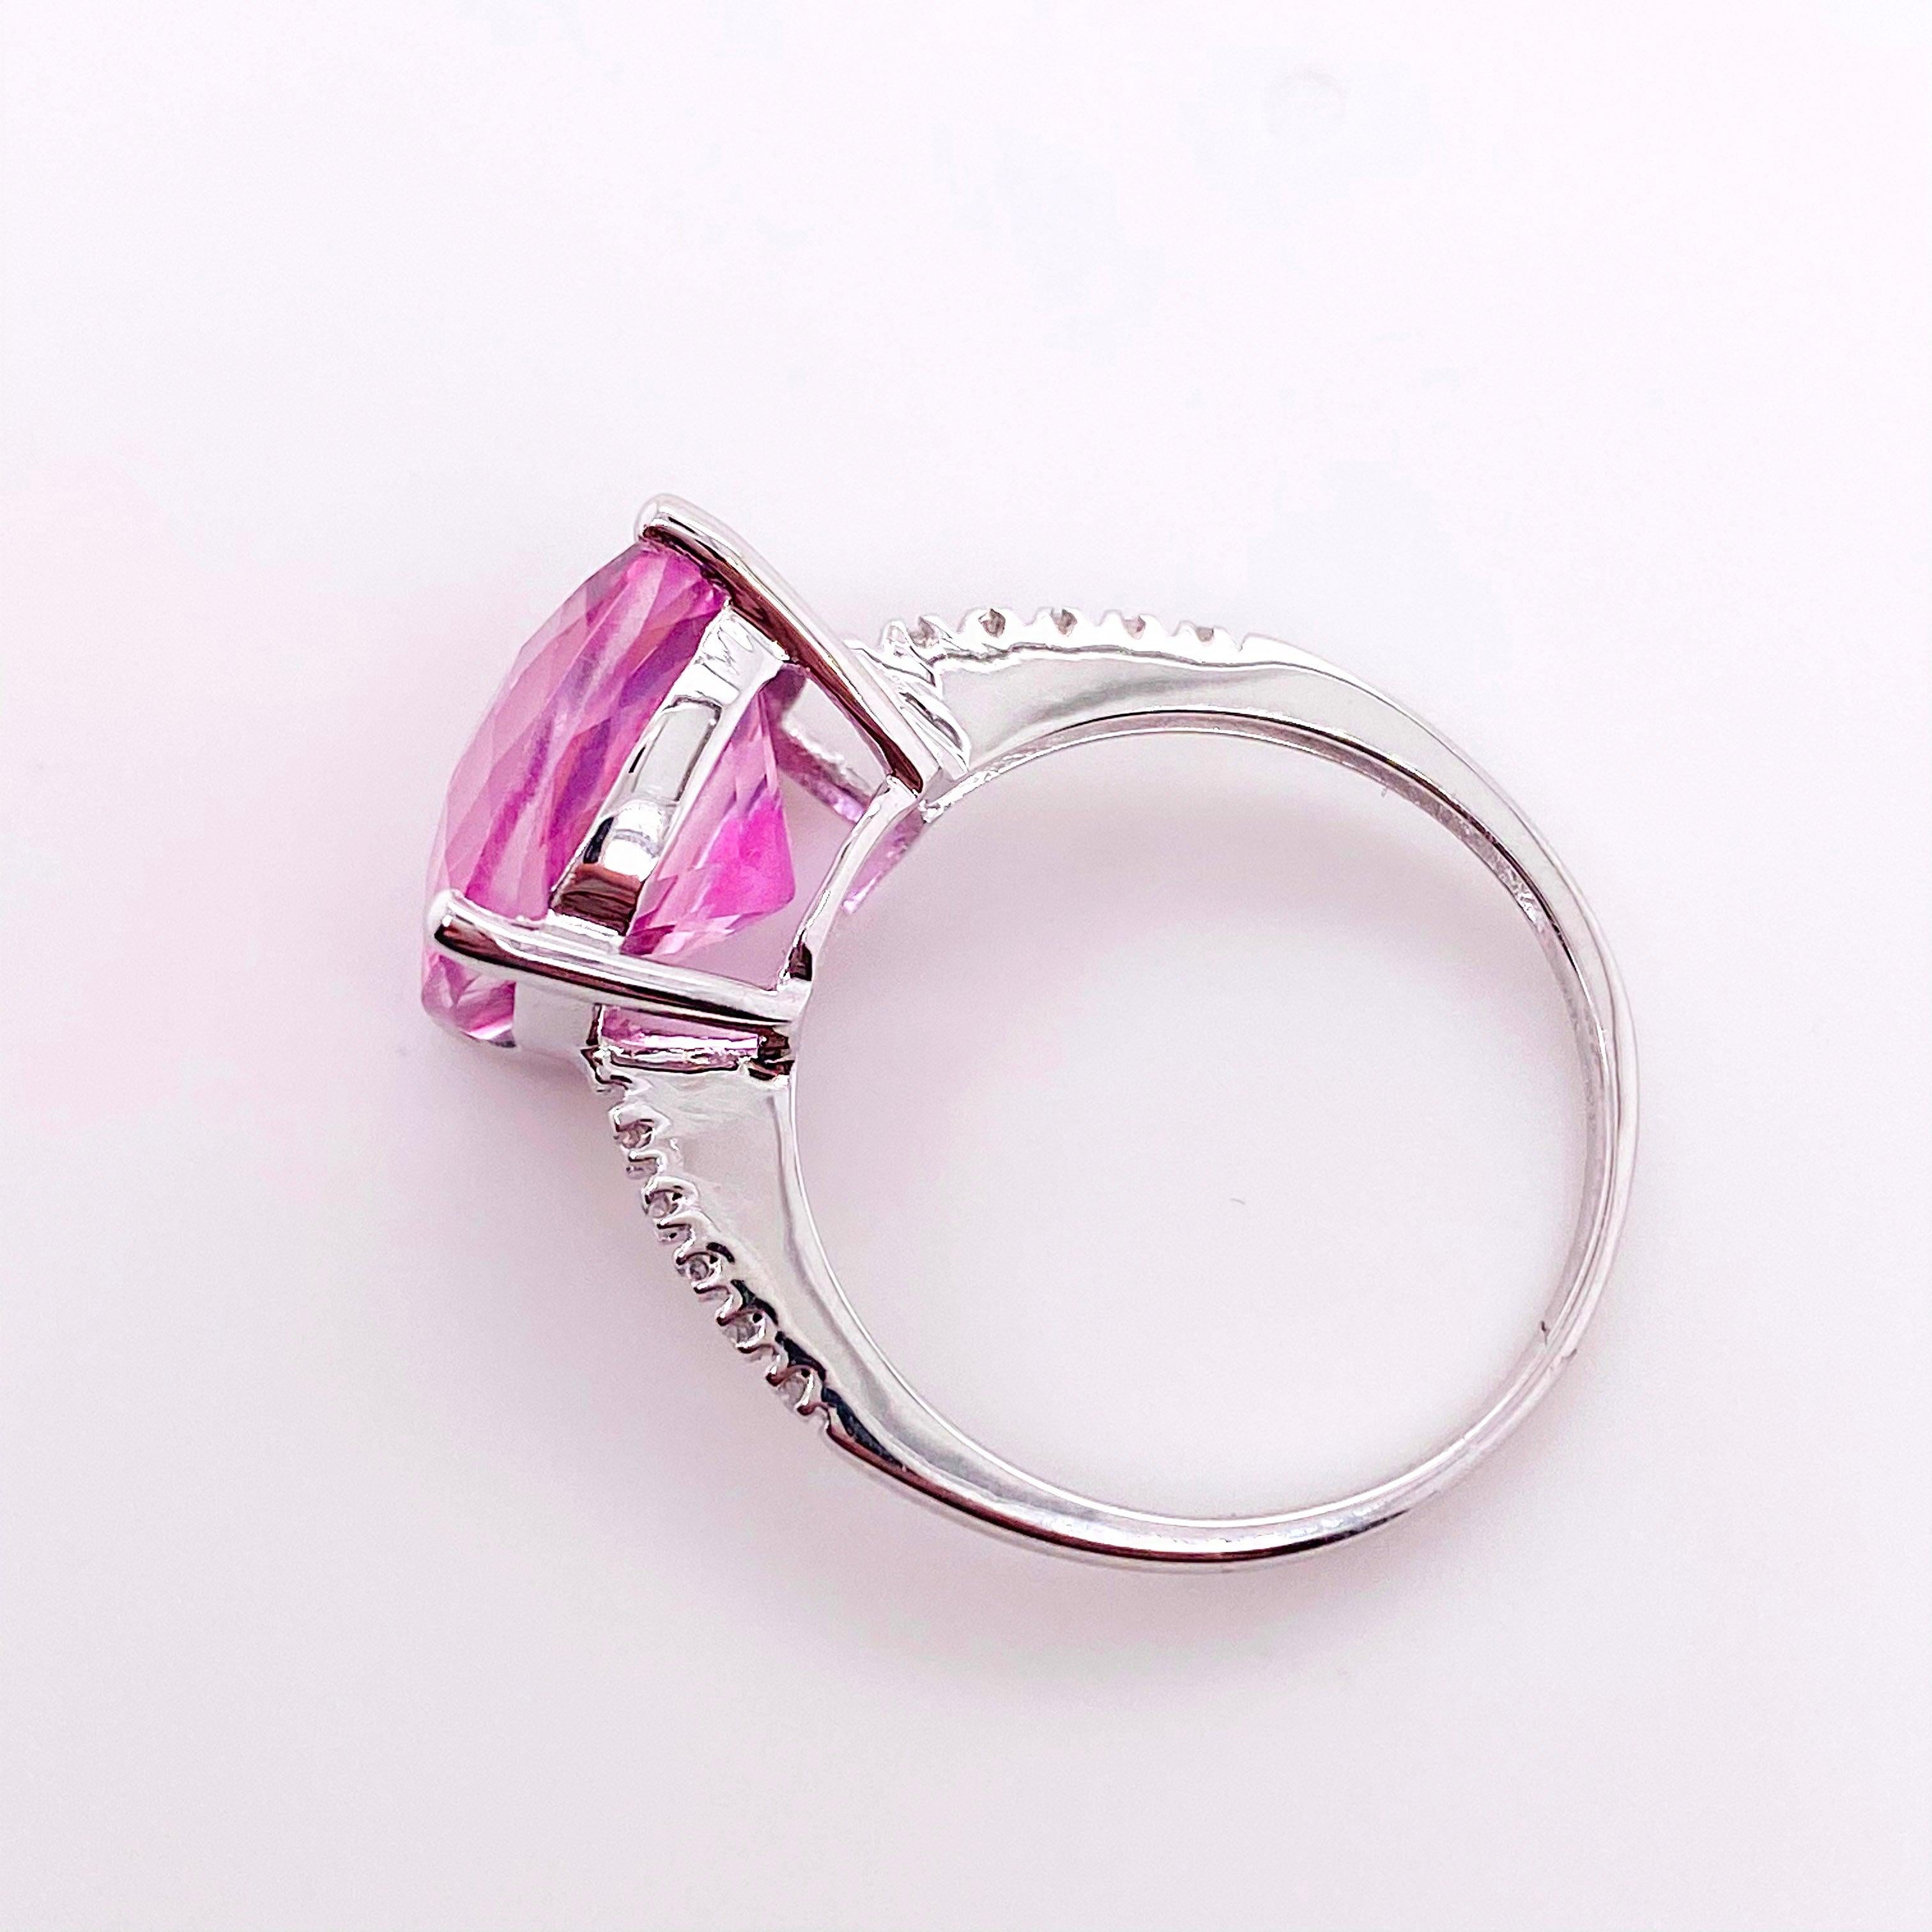 For Sale:  8 Carat Pink Topaz and Diamond Ring 14 Karat White Gold Cushion Cut Pink Topaz 4